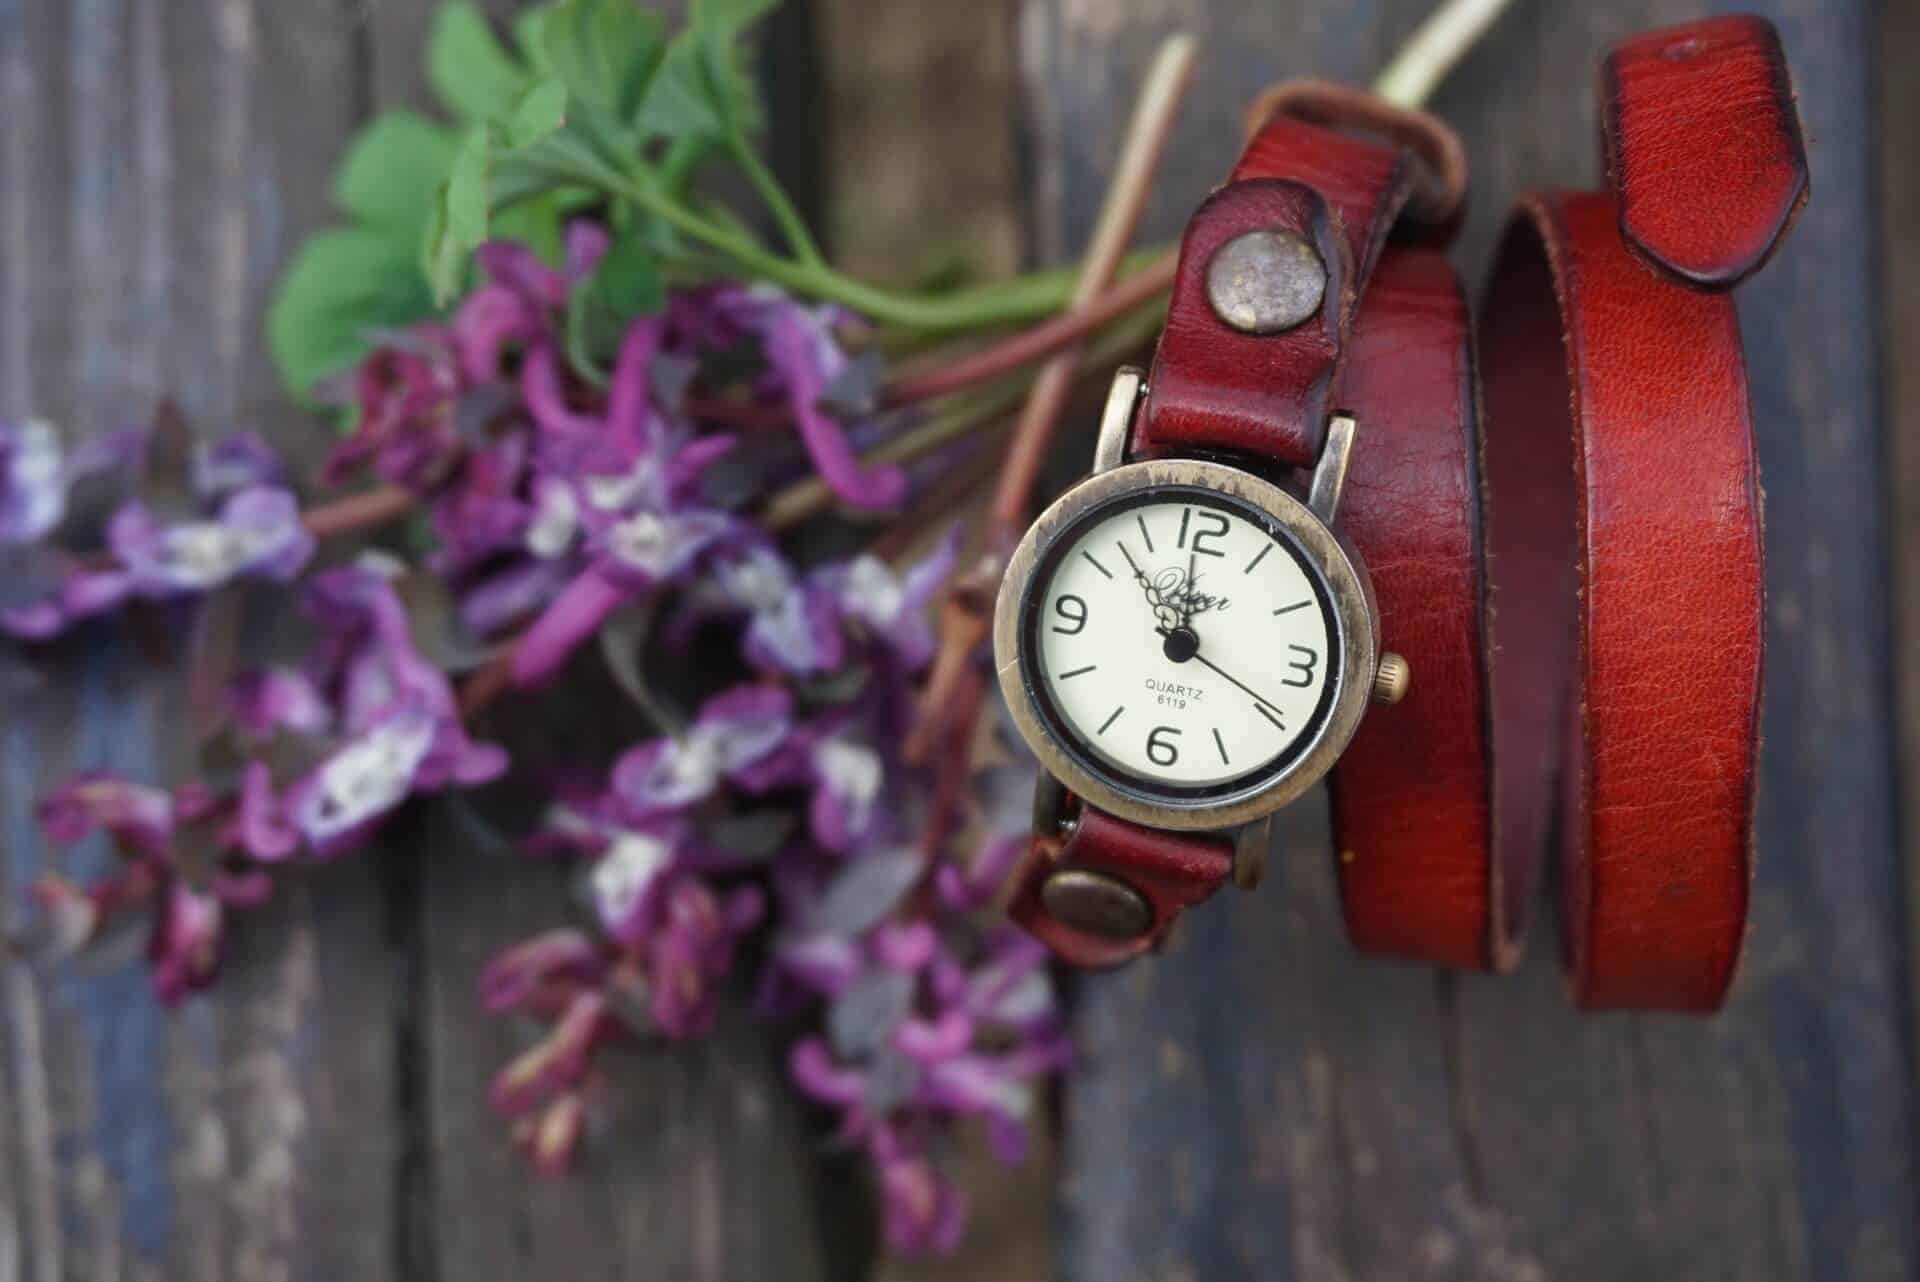 vintage-watch